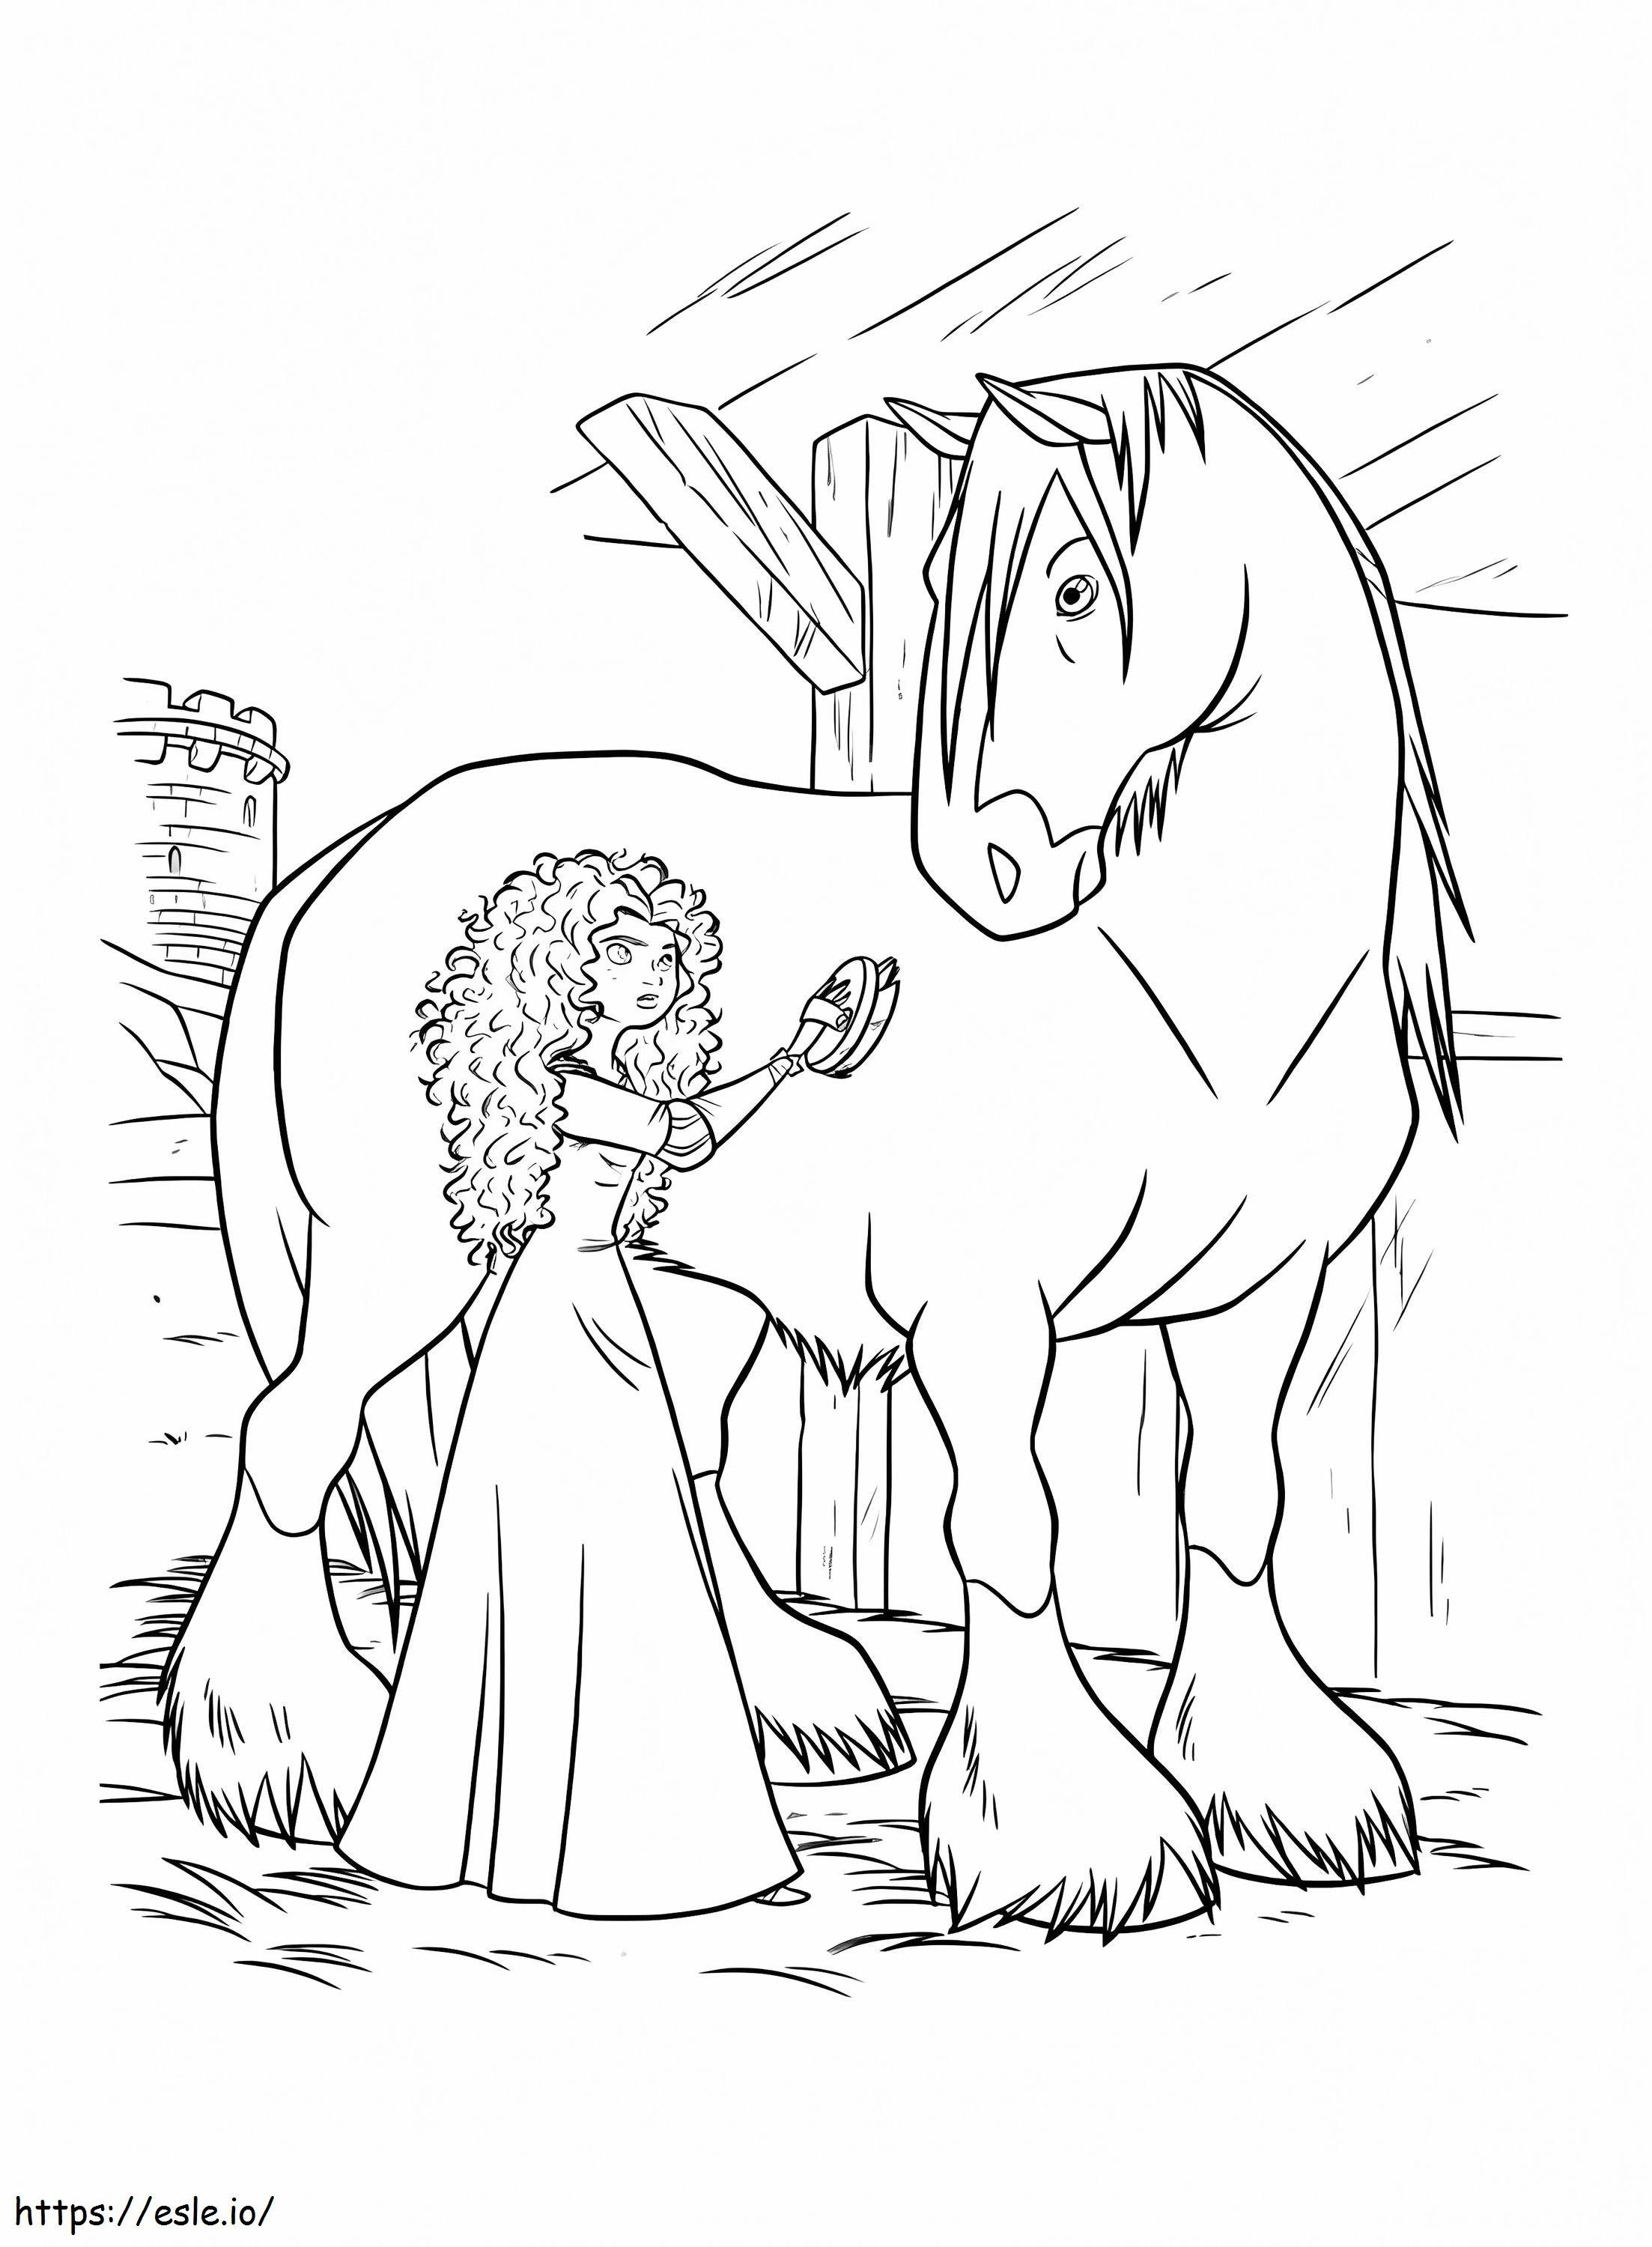 Princess Merida With Angus 1 coloring page